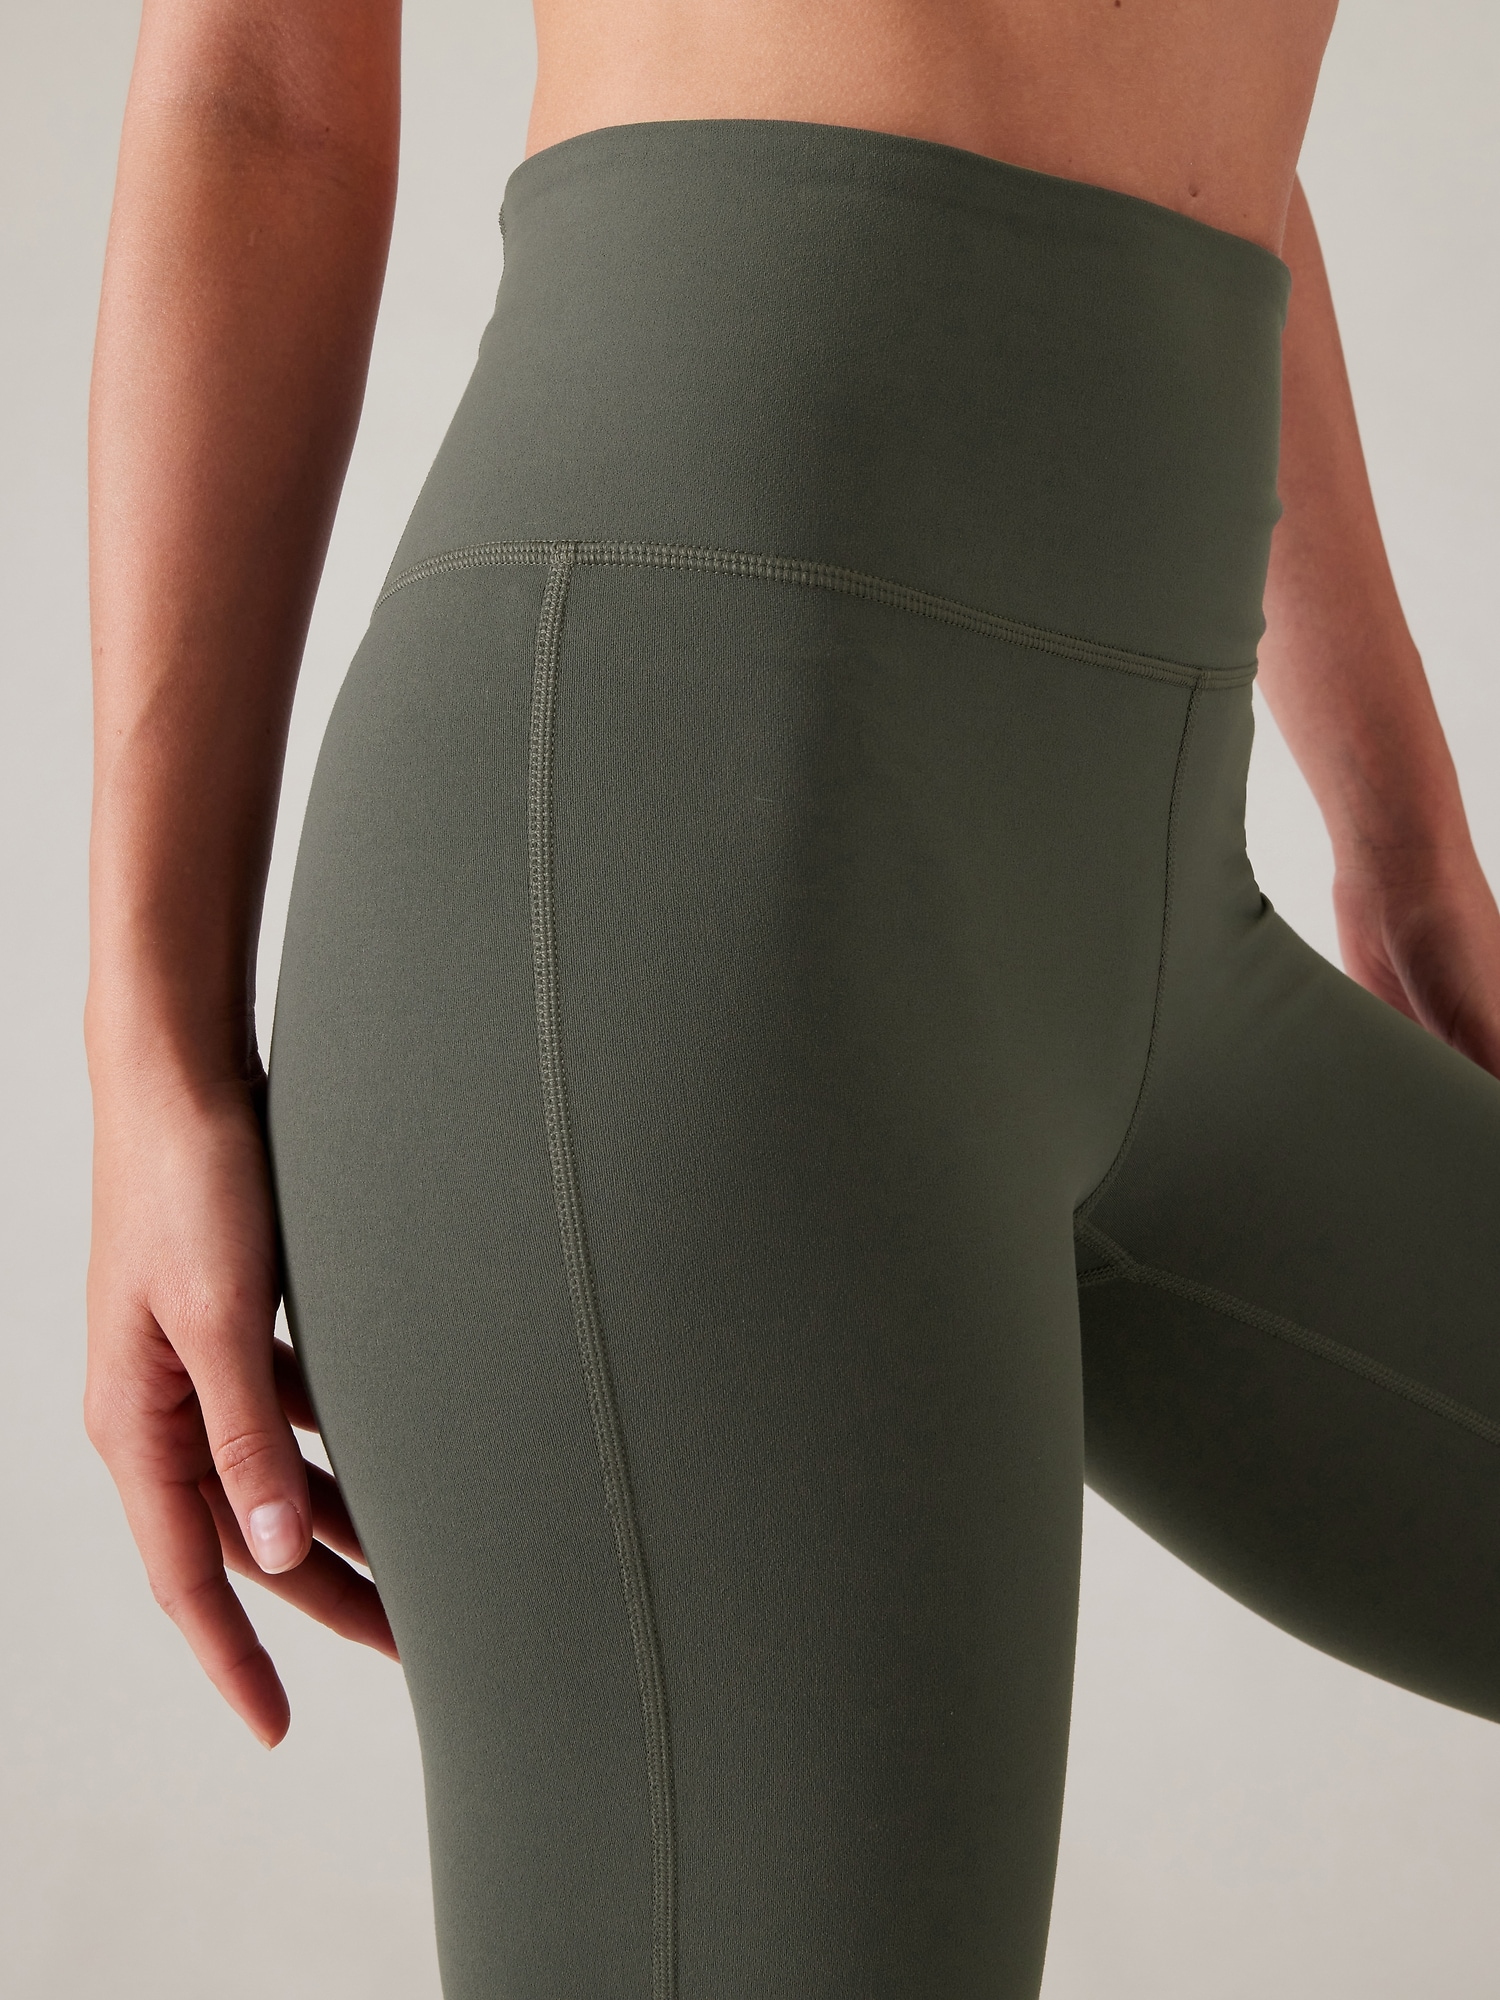 Grey Flare Leggings for Women Petite Women's Casual Summer Solid Elastic  High Waist Slim Pants Yoga Sport Horn